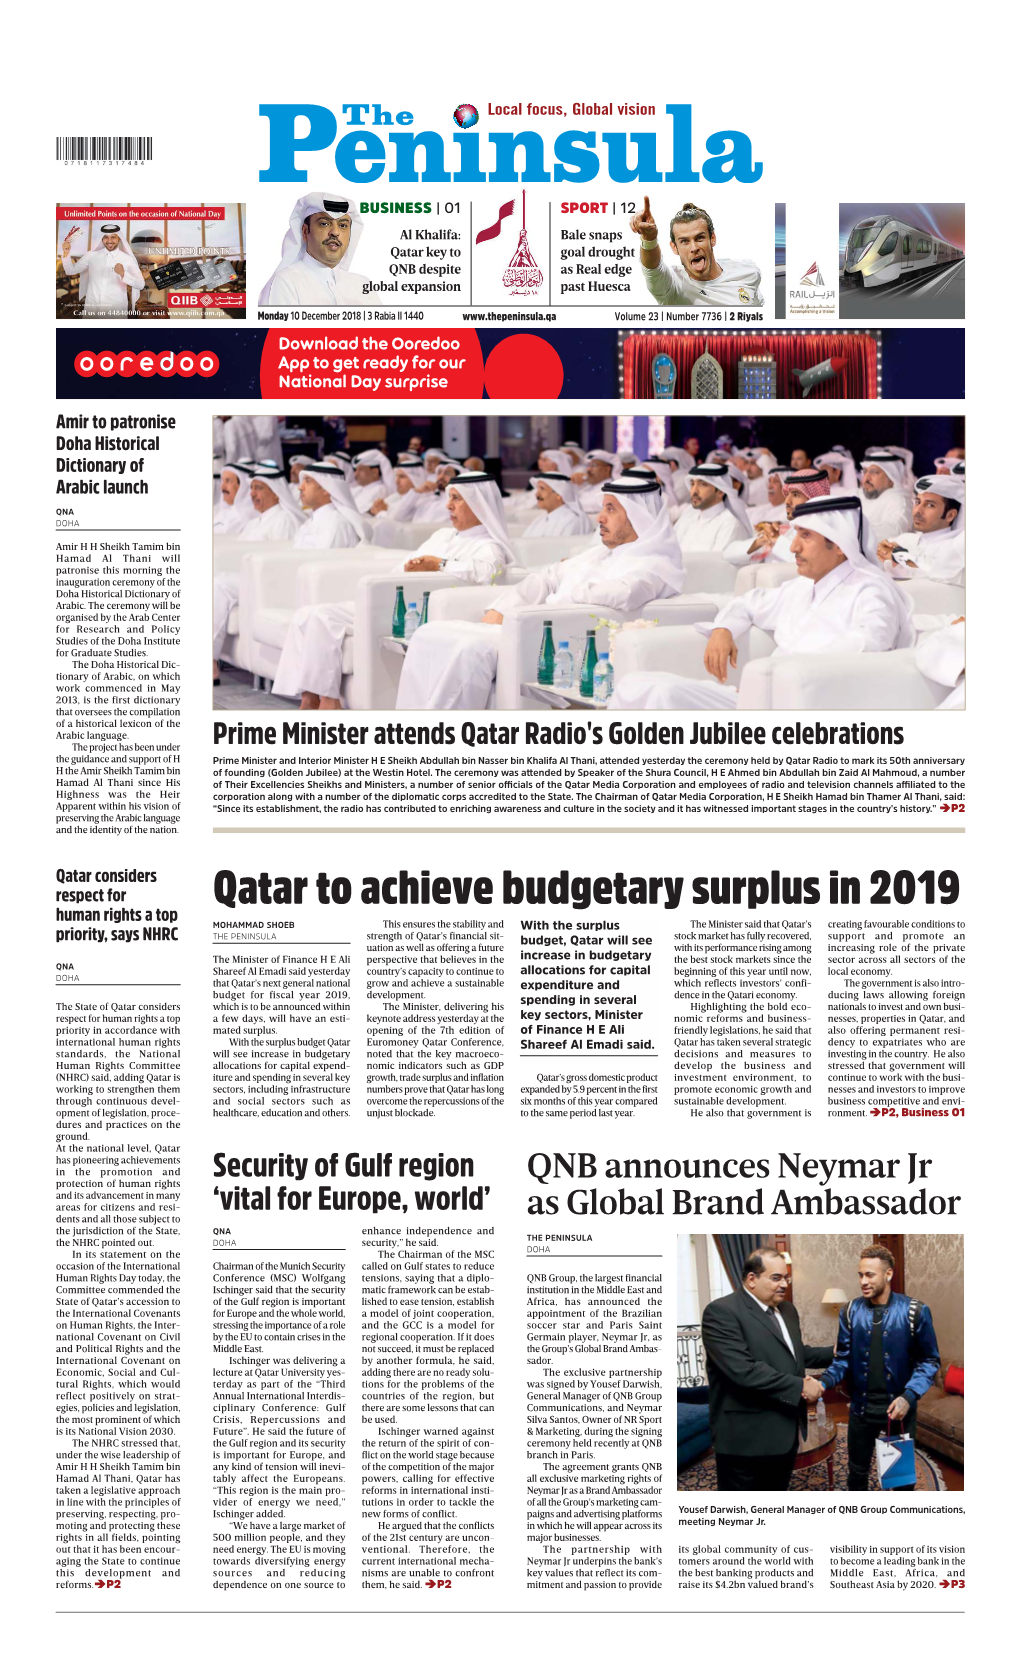 Qatar to Achieve Budgetary Surplus in 2019